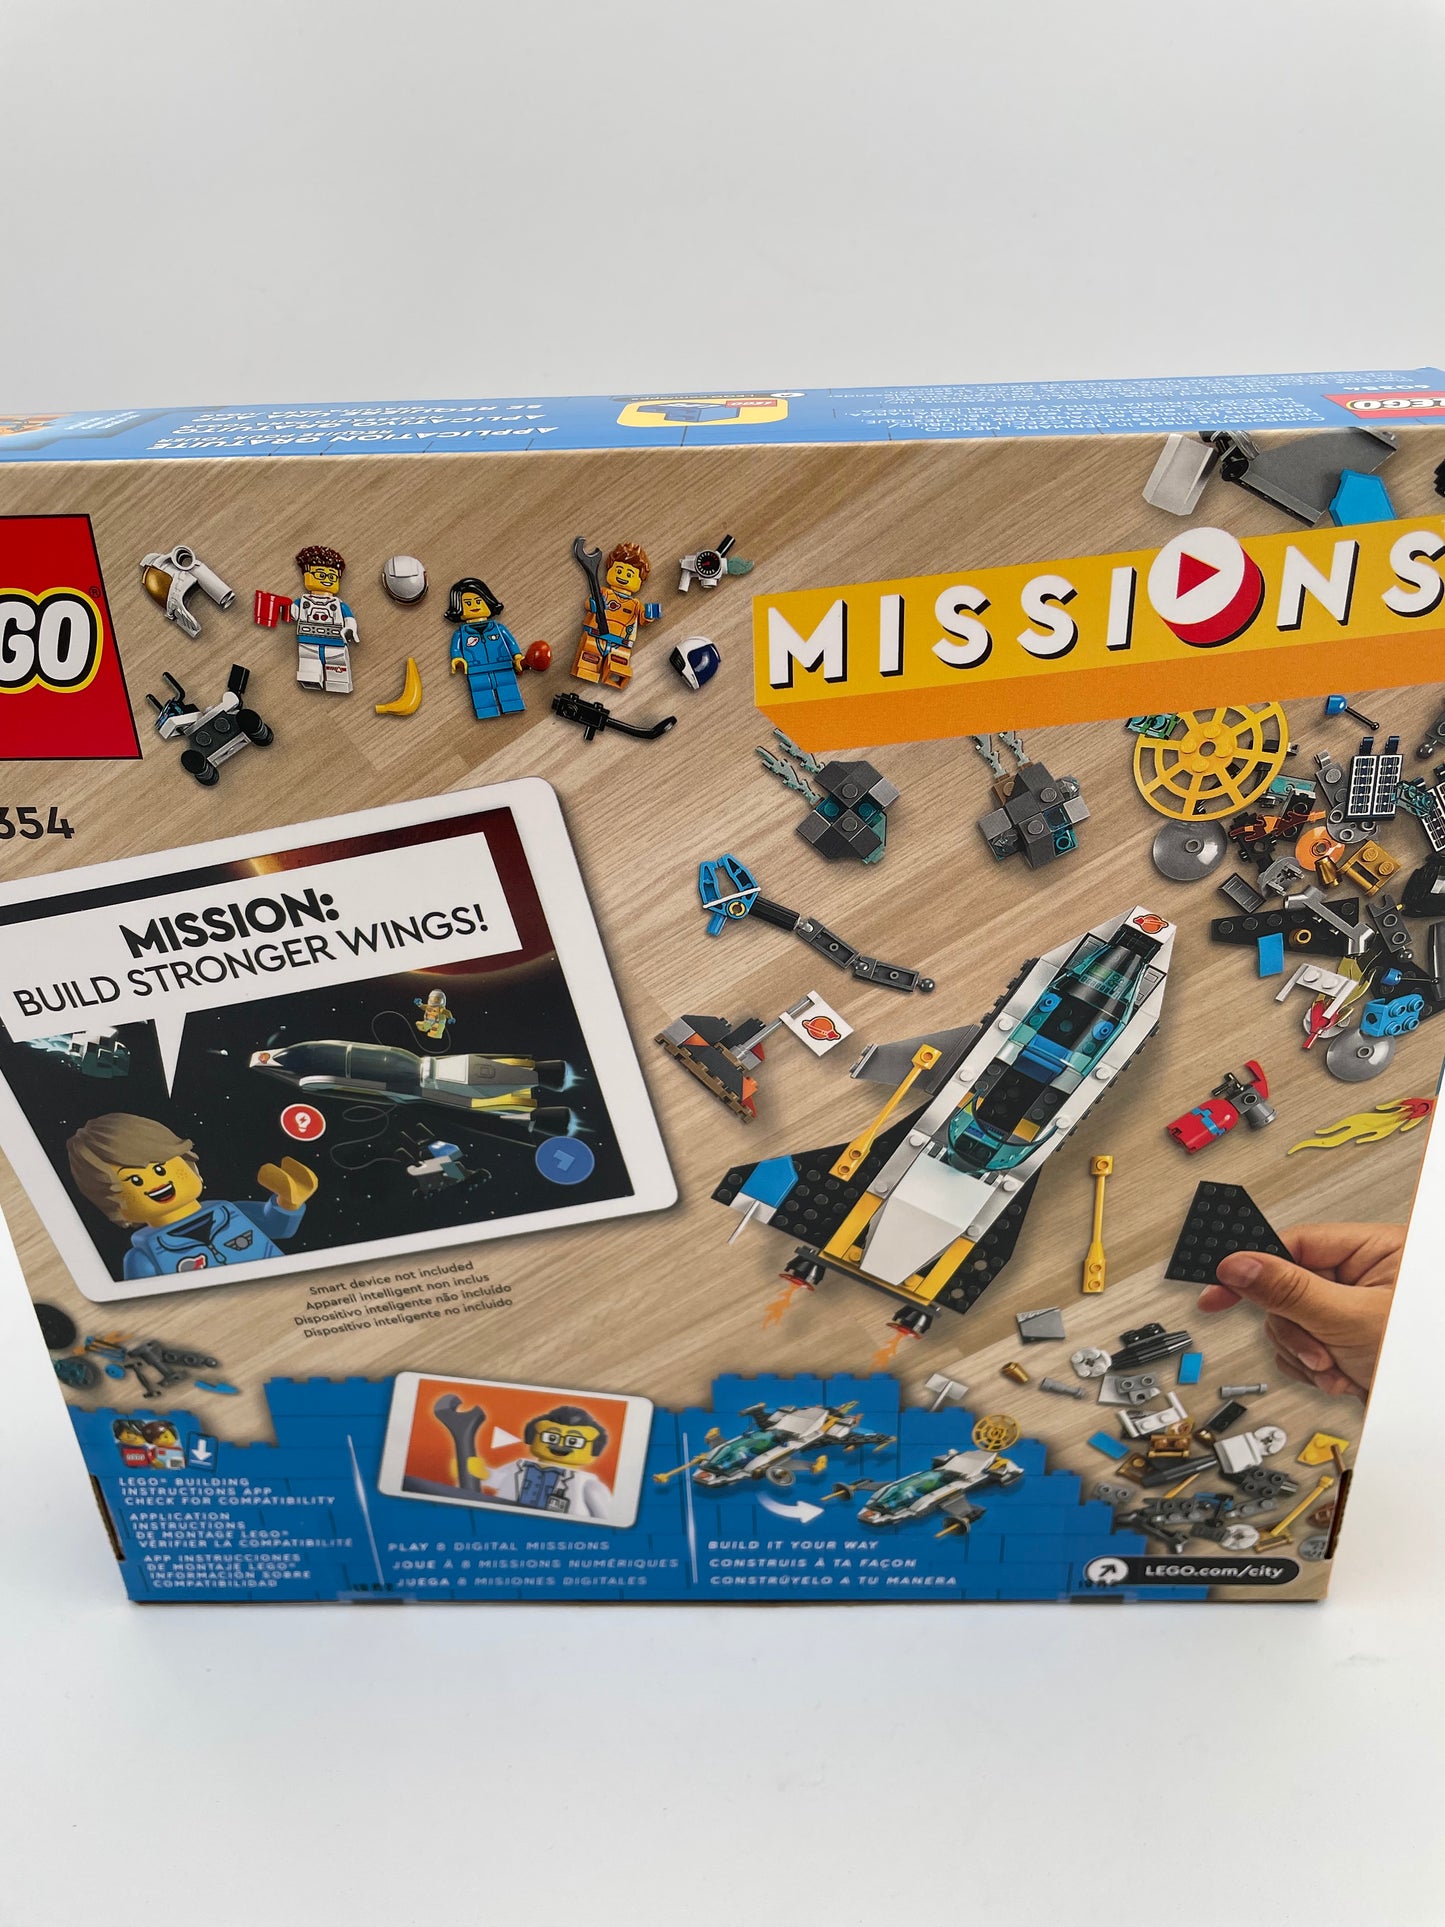 LEGO 60354 - City Missions - Mars Spacecraft Exploration 2022 #100380